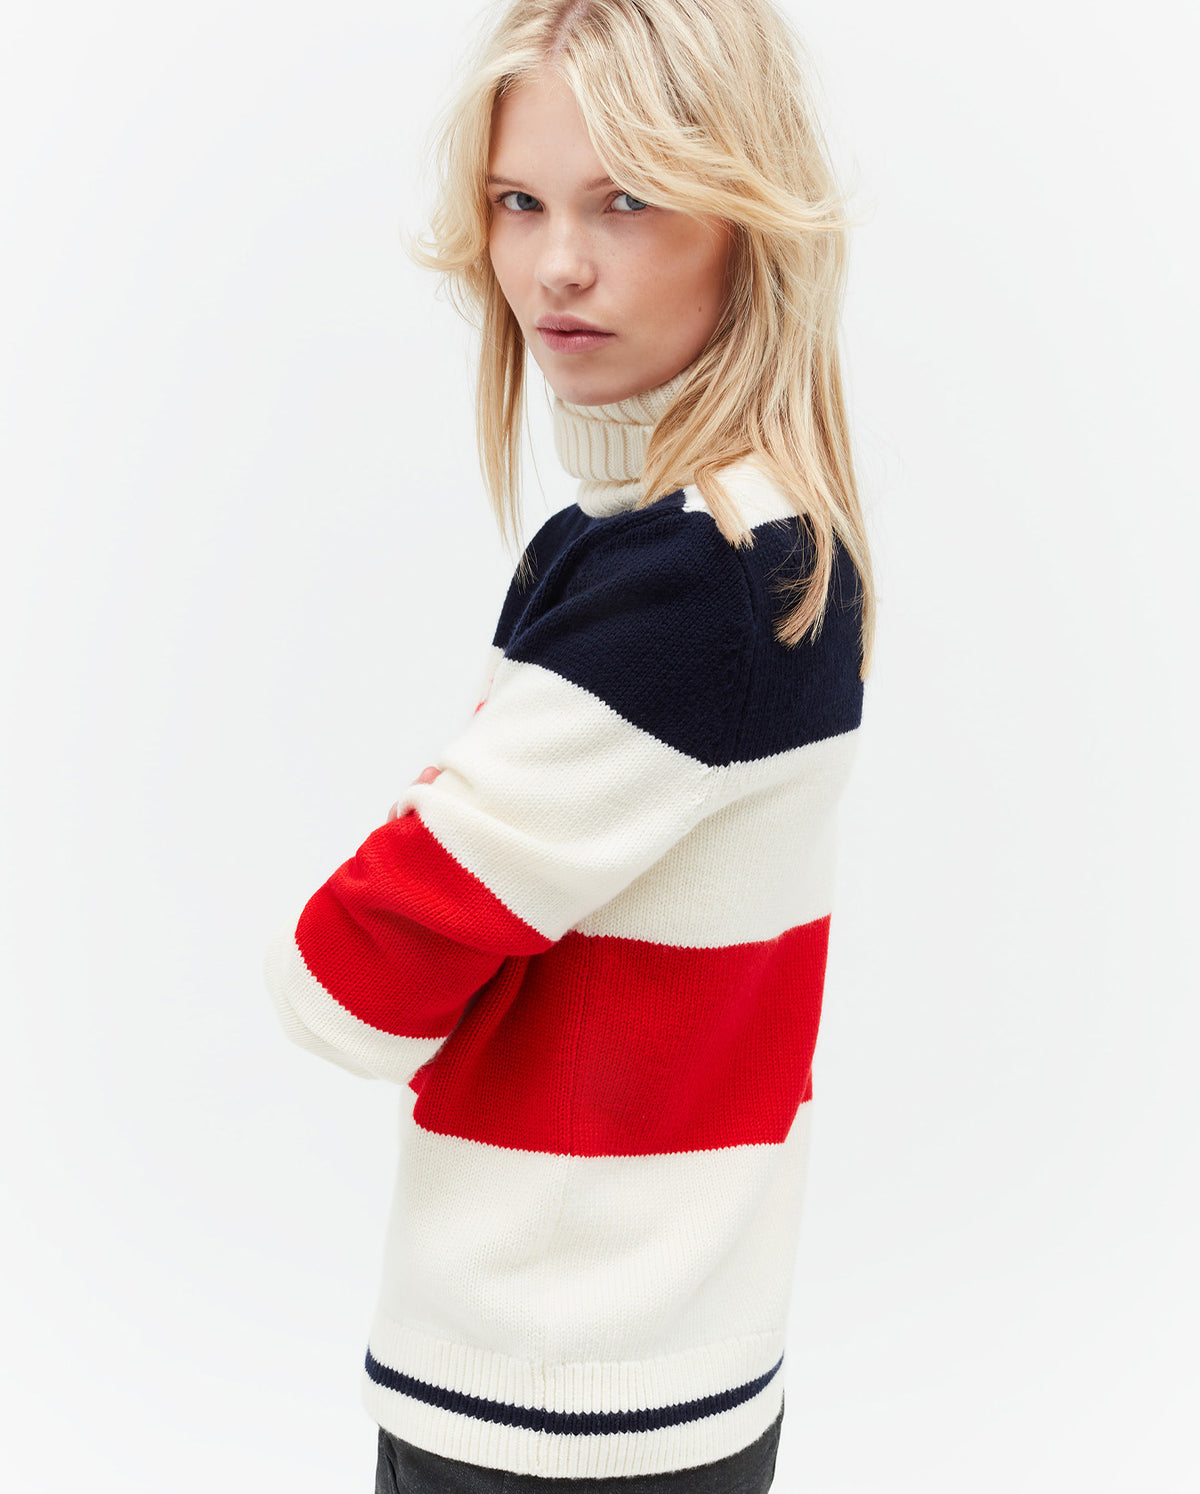 Frostine Sweater - Red/Snow White/Navy